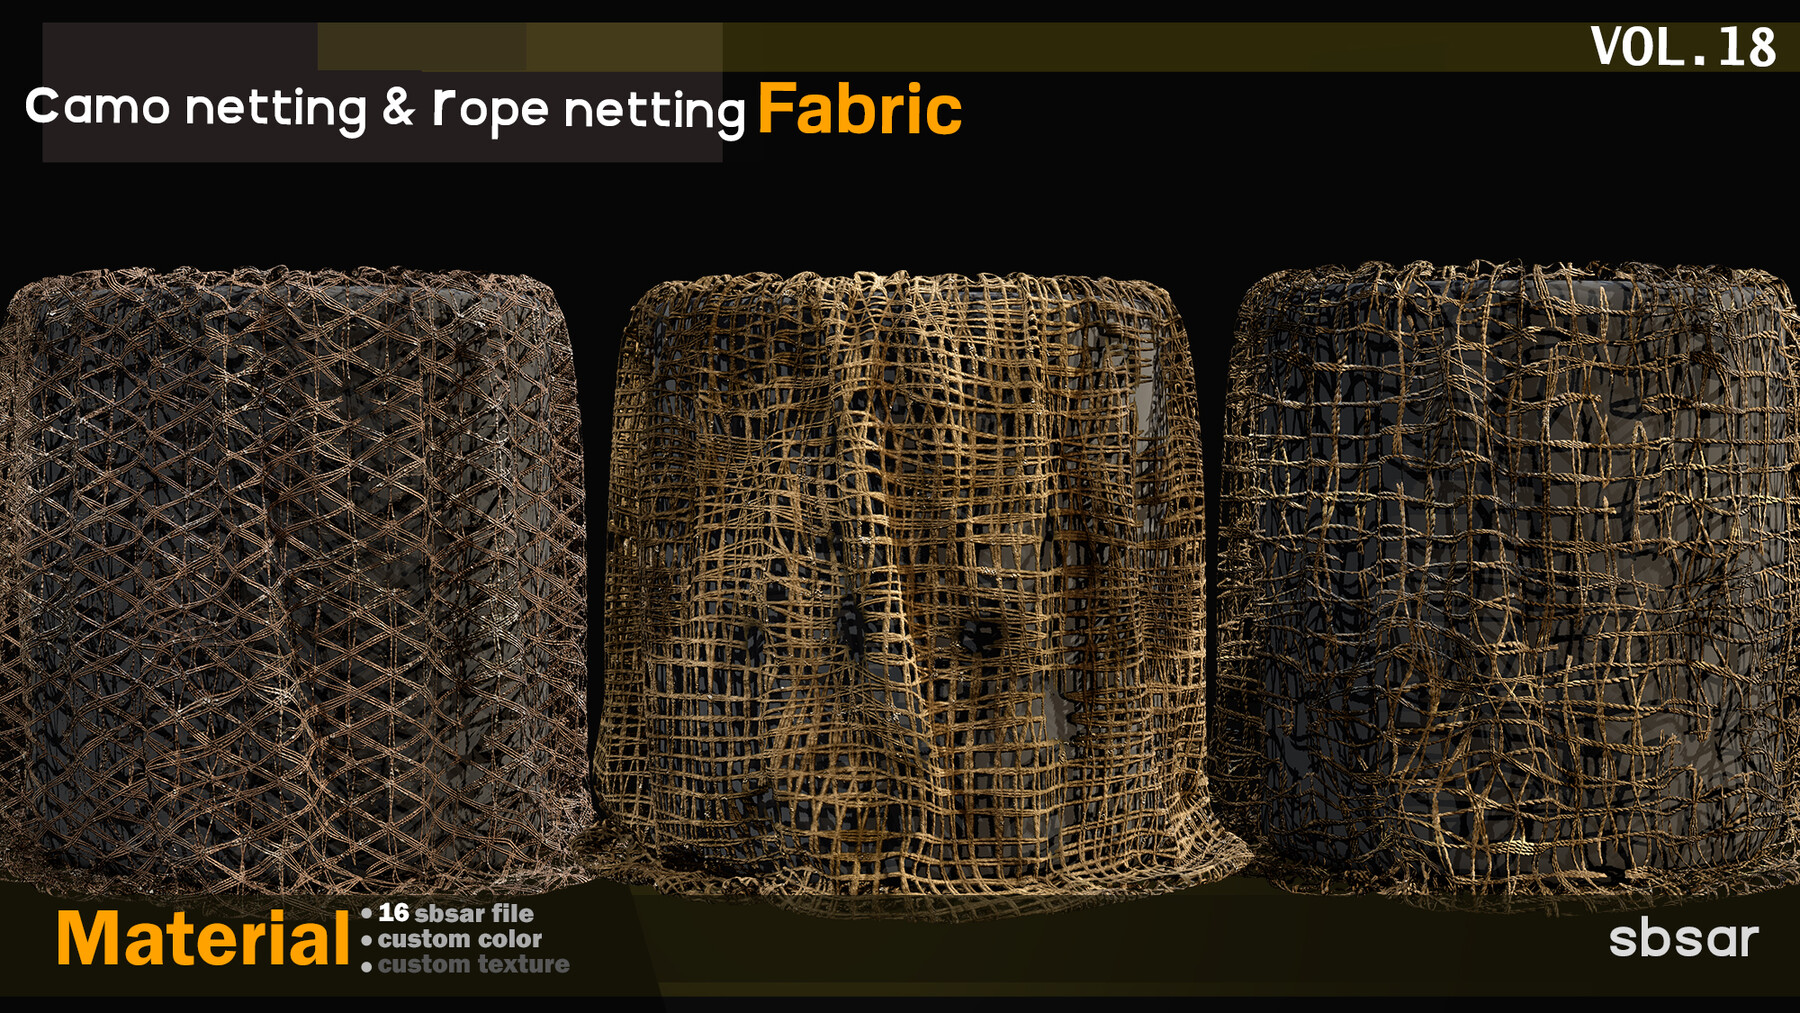 ArtStation - camo netting & rope netting fabric Material -SBSAR